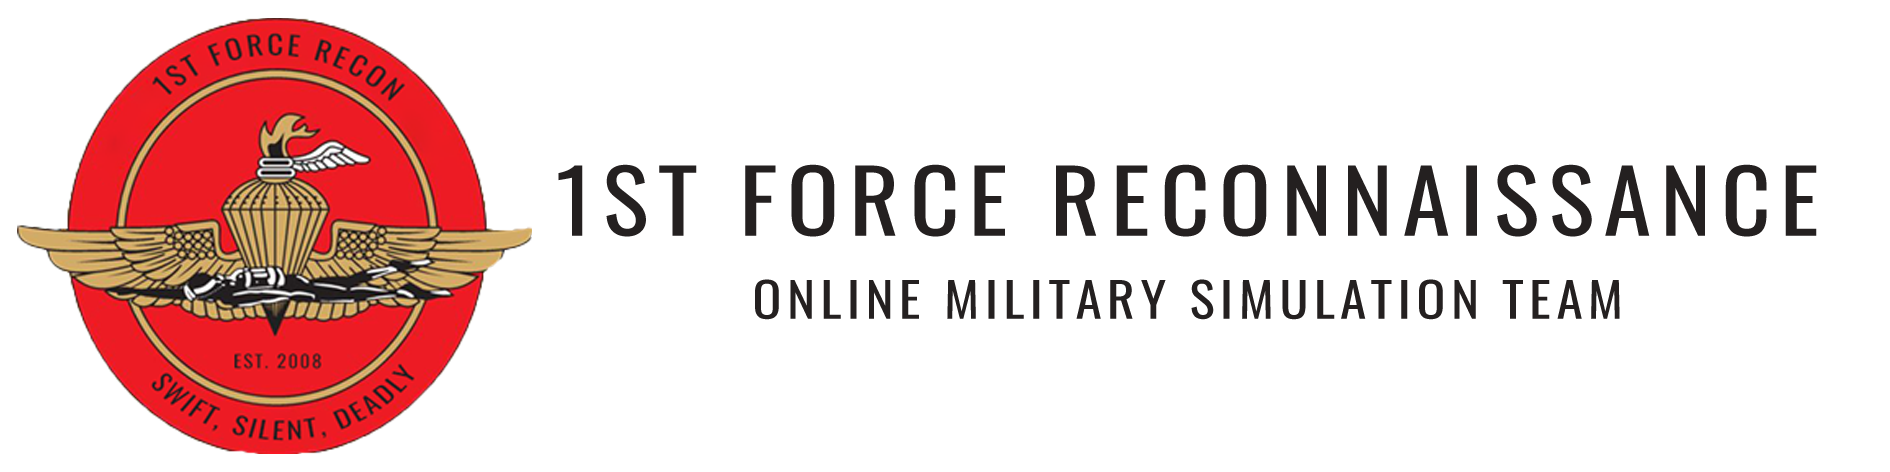 1st Force Reconnaissance OMST